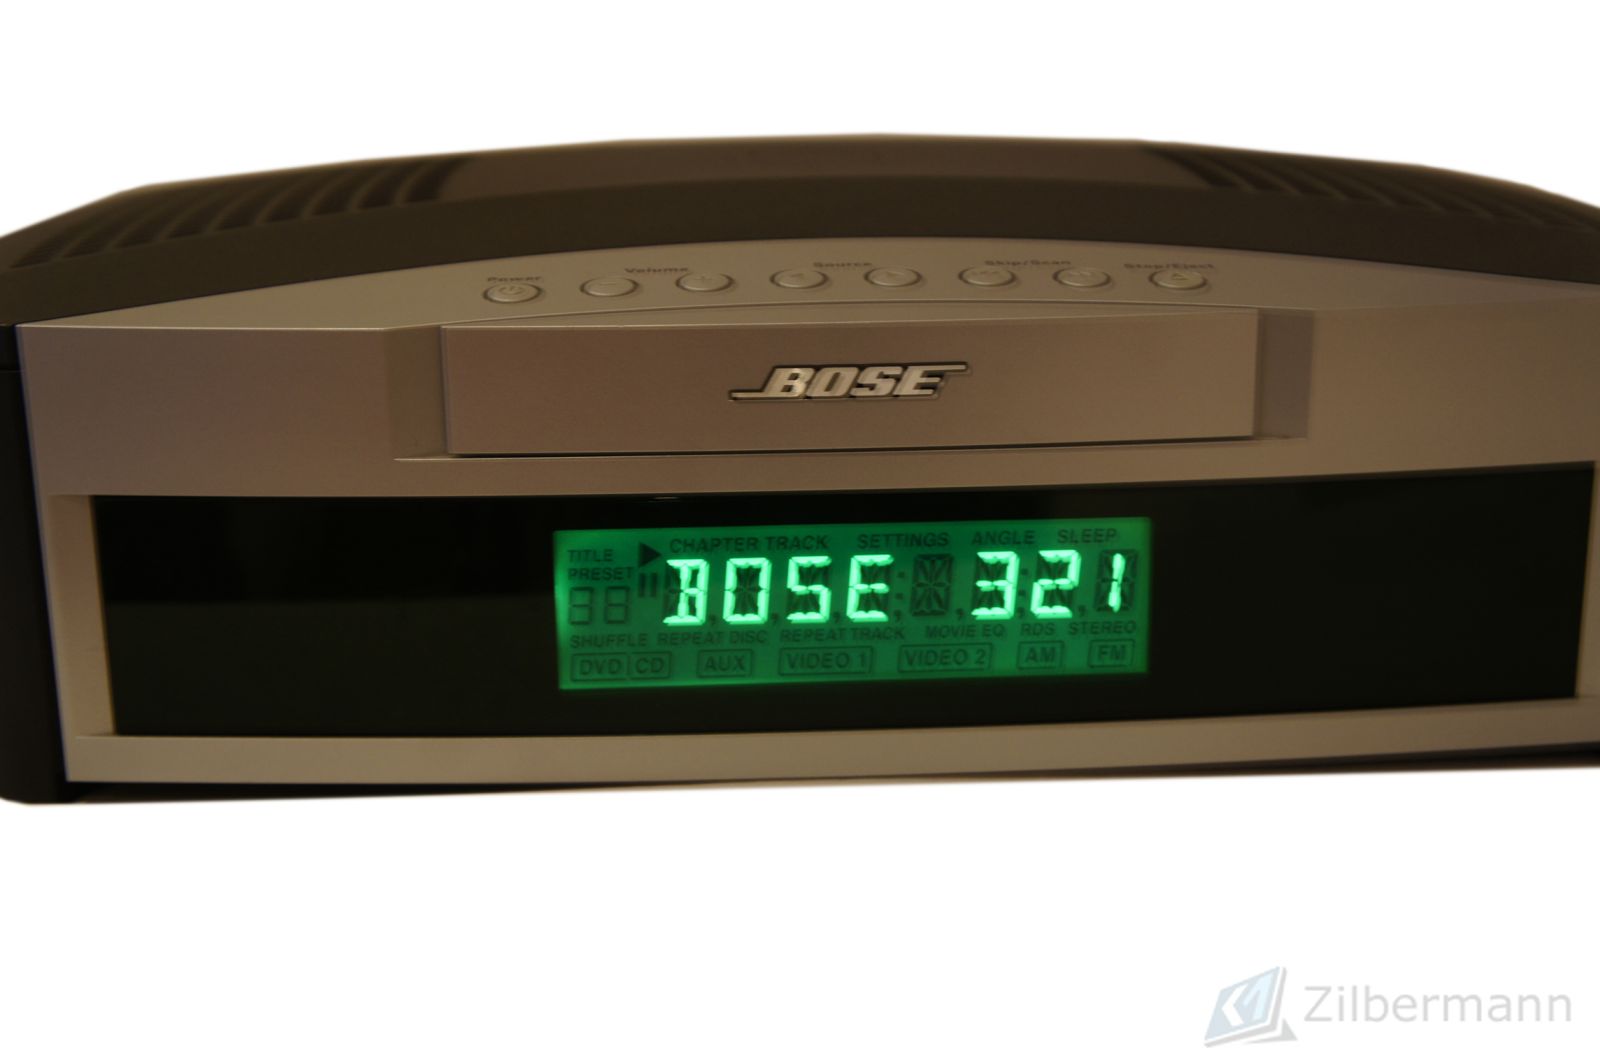 Bose_3-2-1_321_Series_I_Media_Center